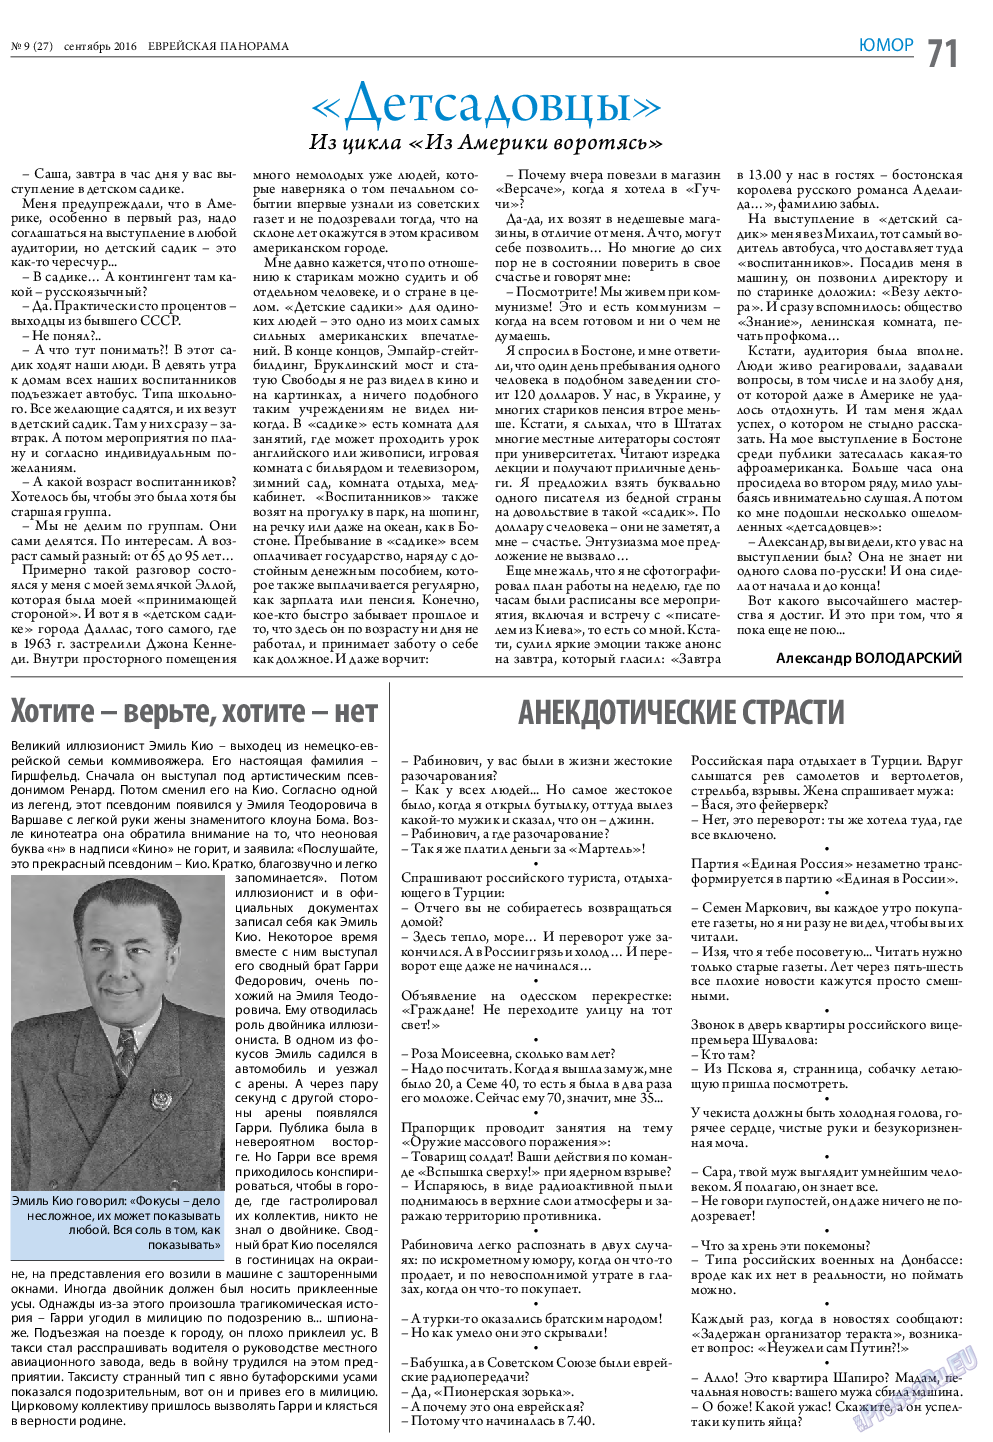 Еврейская панорама, газета. 2016 №9 стр.71